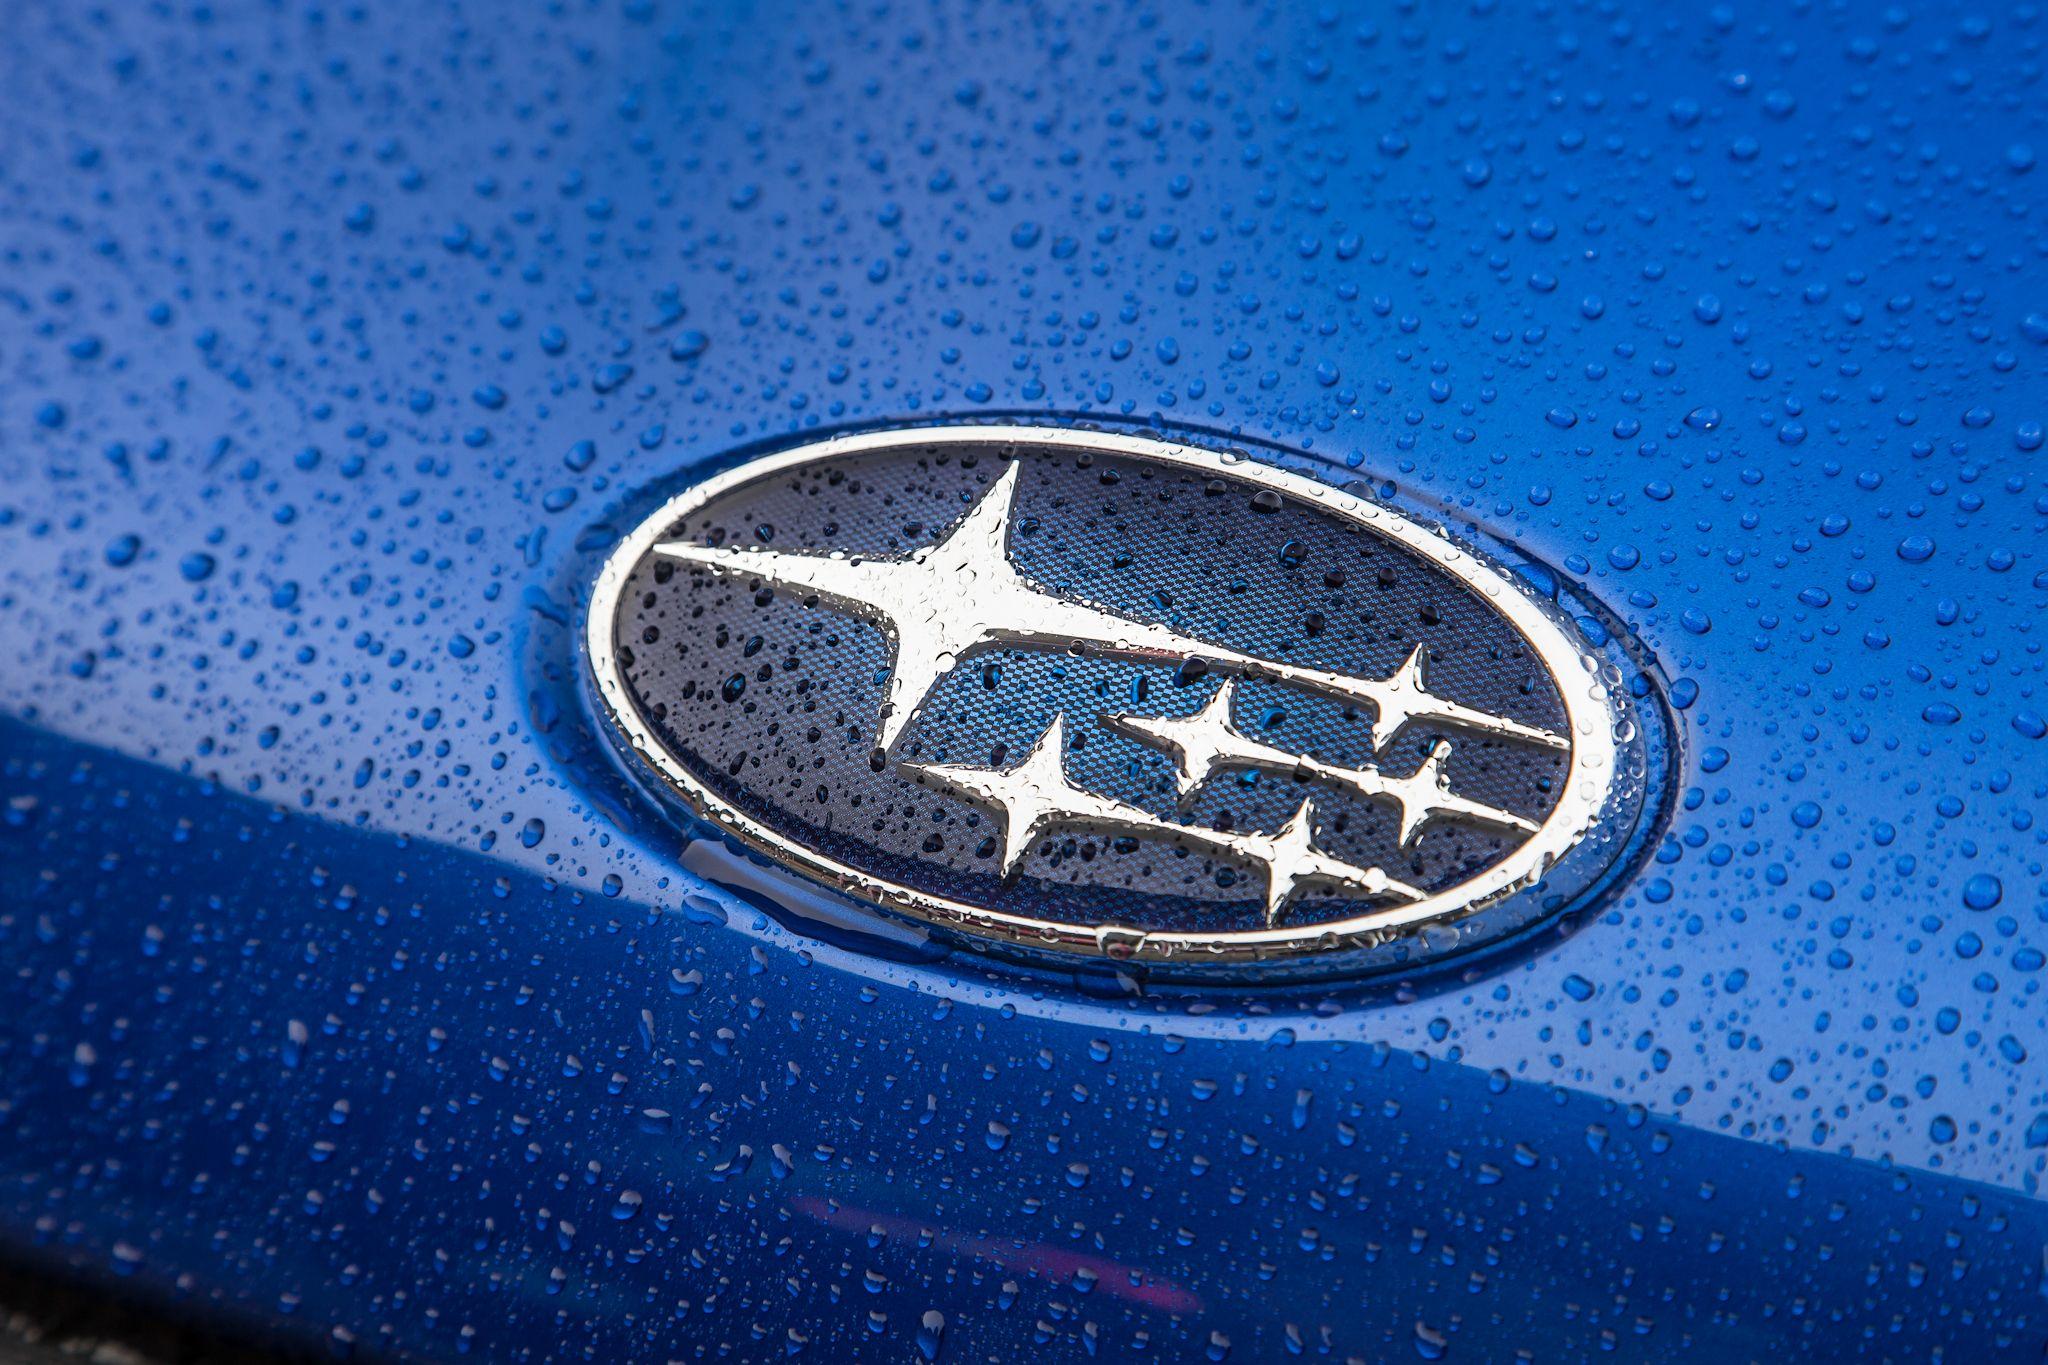 Subaru Logo - Subaru Logo, Subaru Car Symbol Meaning and History | Car Brand Names.com